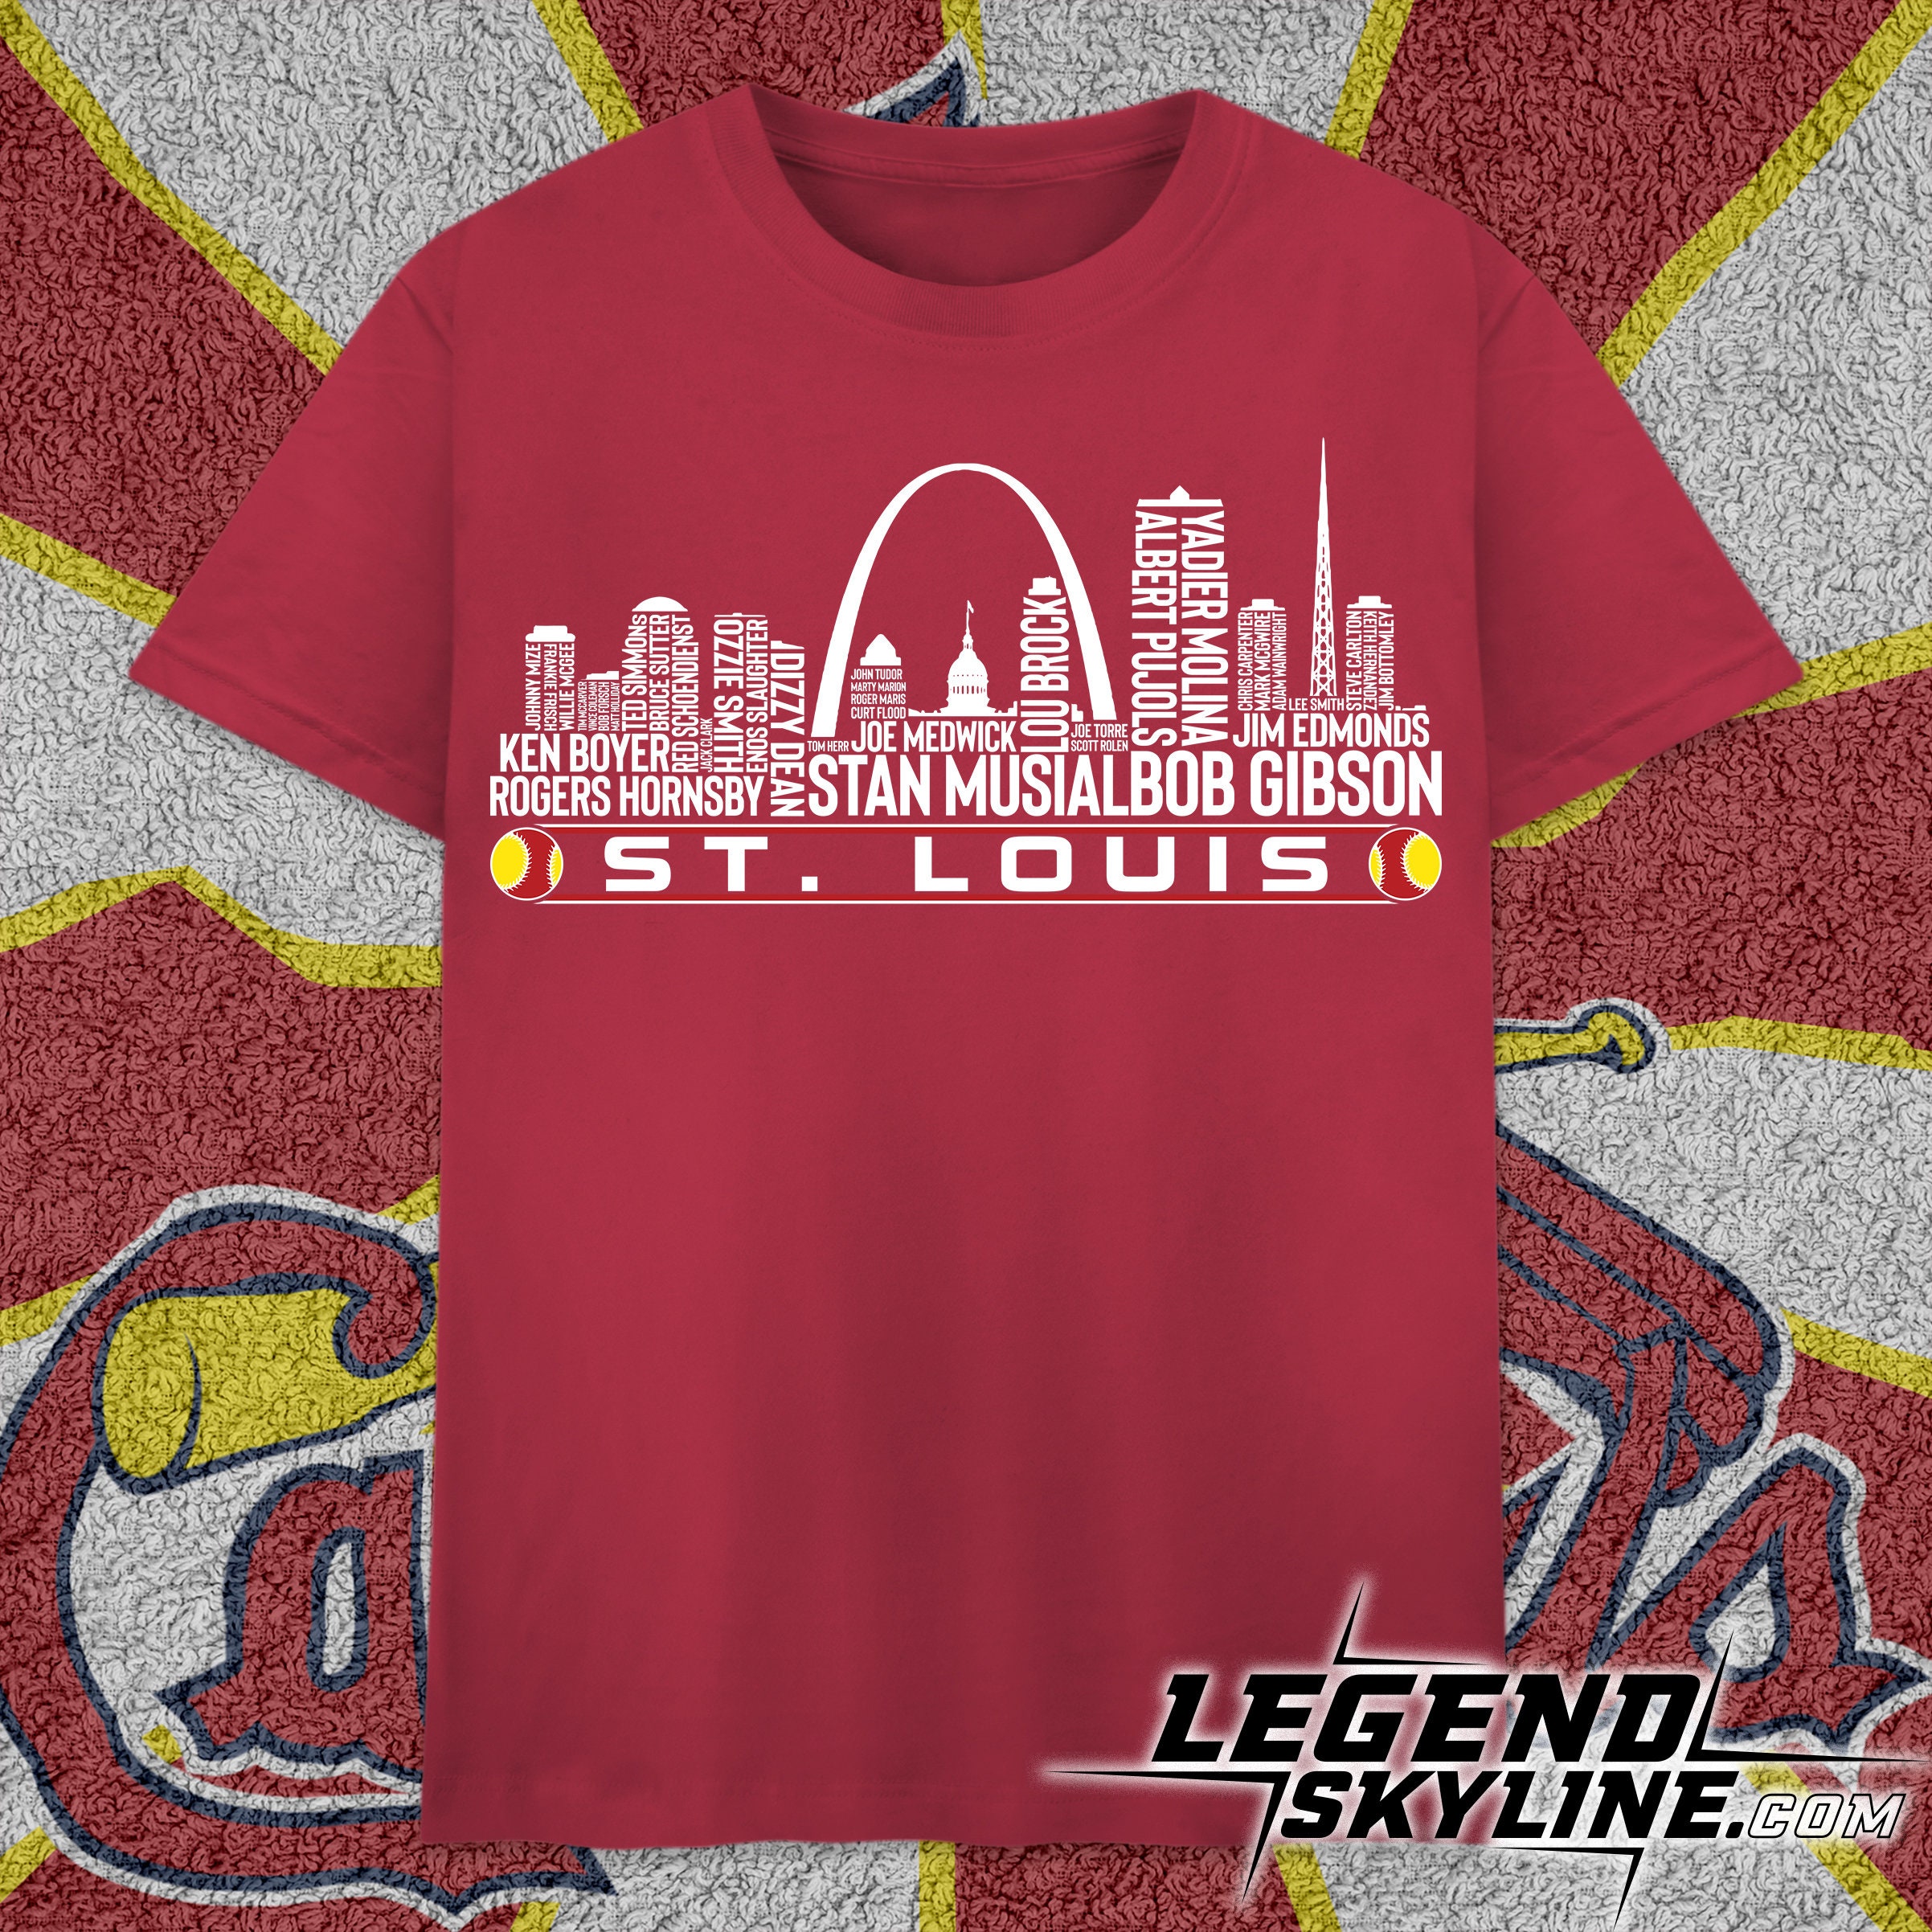 St. Louis Cardinals Red Union Arch Men's T-Shirt – Peoria Chiefs